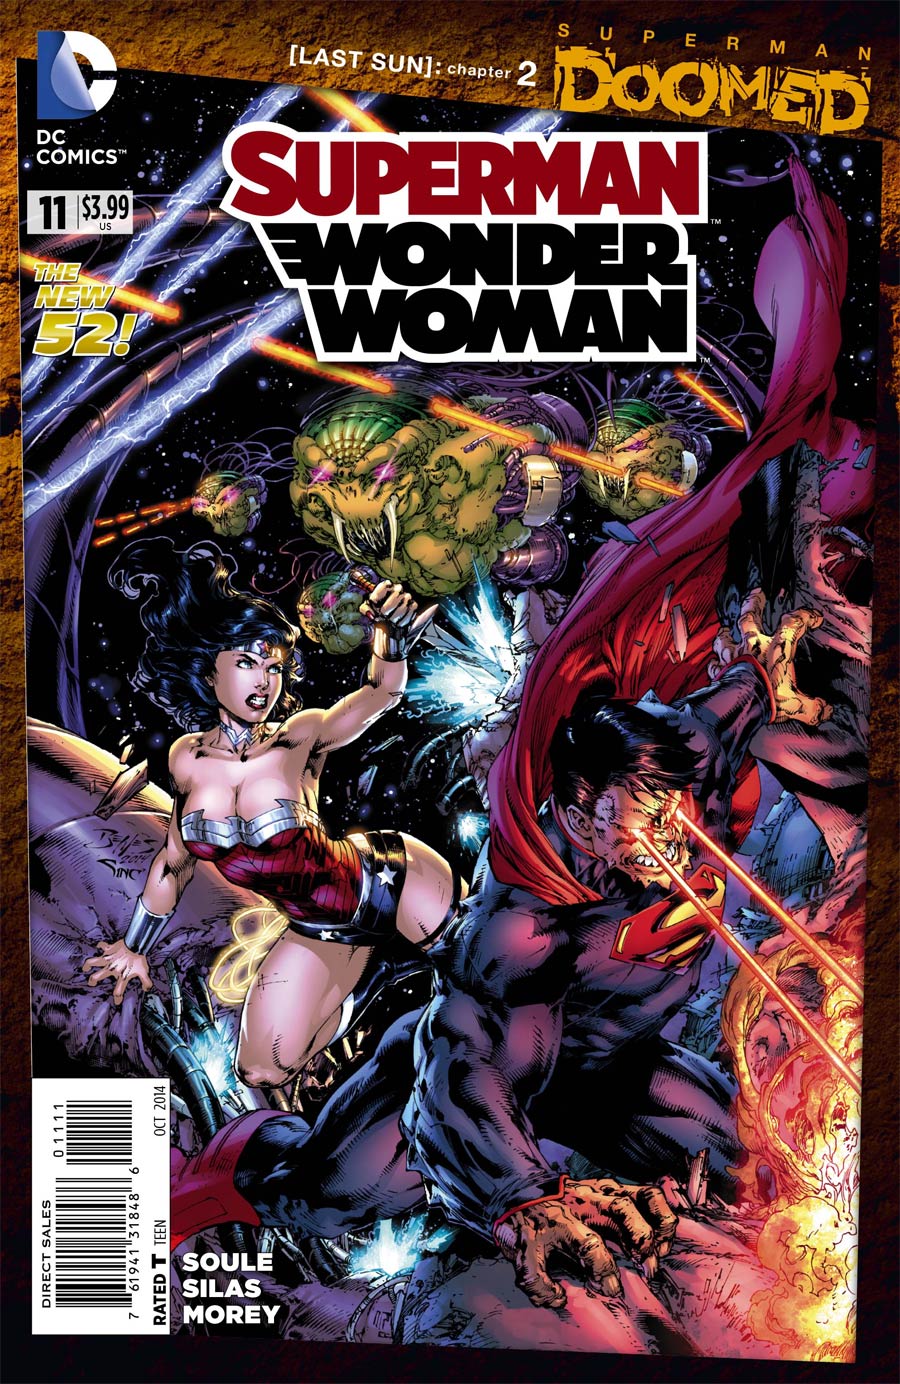 Superman Wonder Woman #11 Cover A Regular Tony S Daniel Cover (Superman Doomed Tie-In)